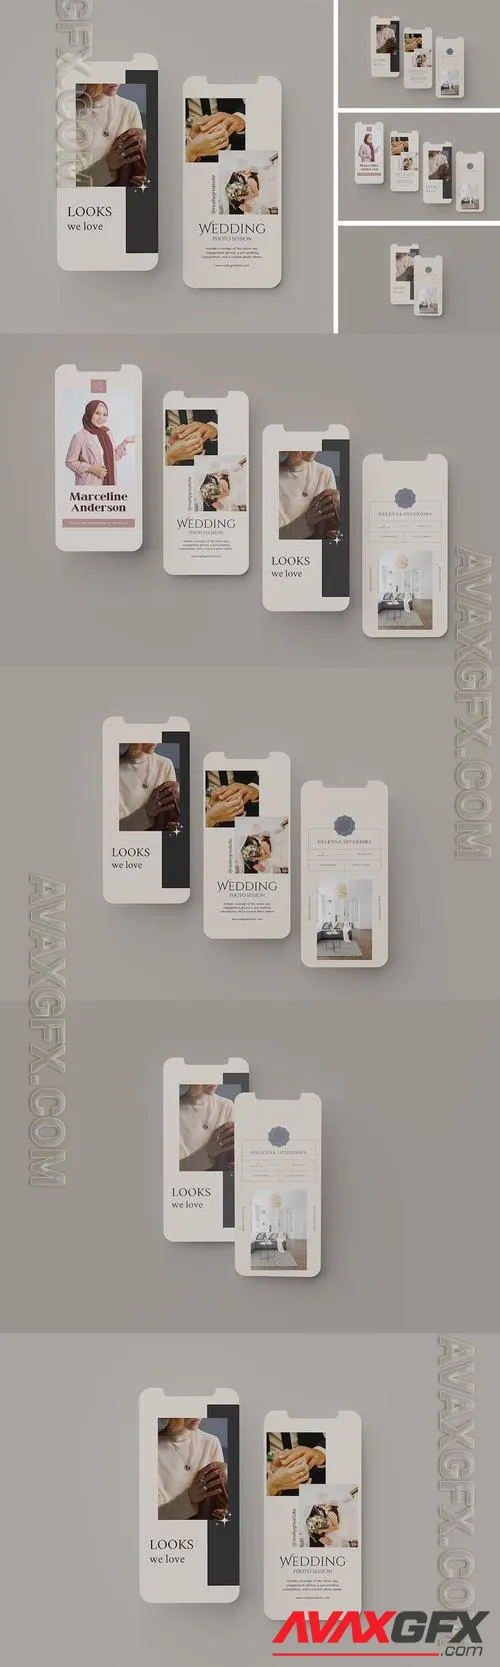 Screen Iphone mockups